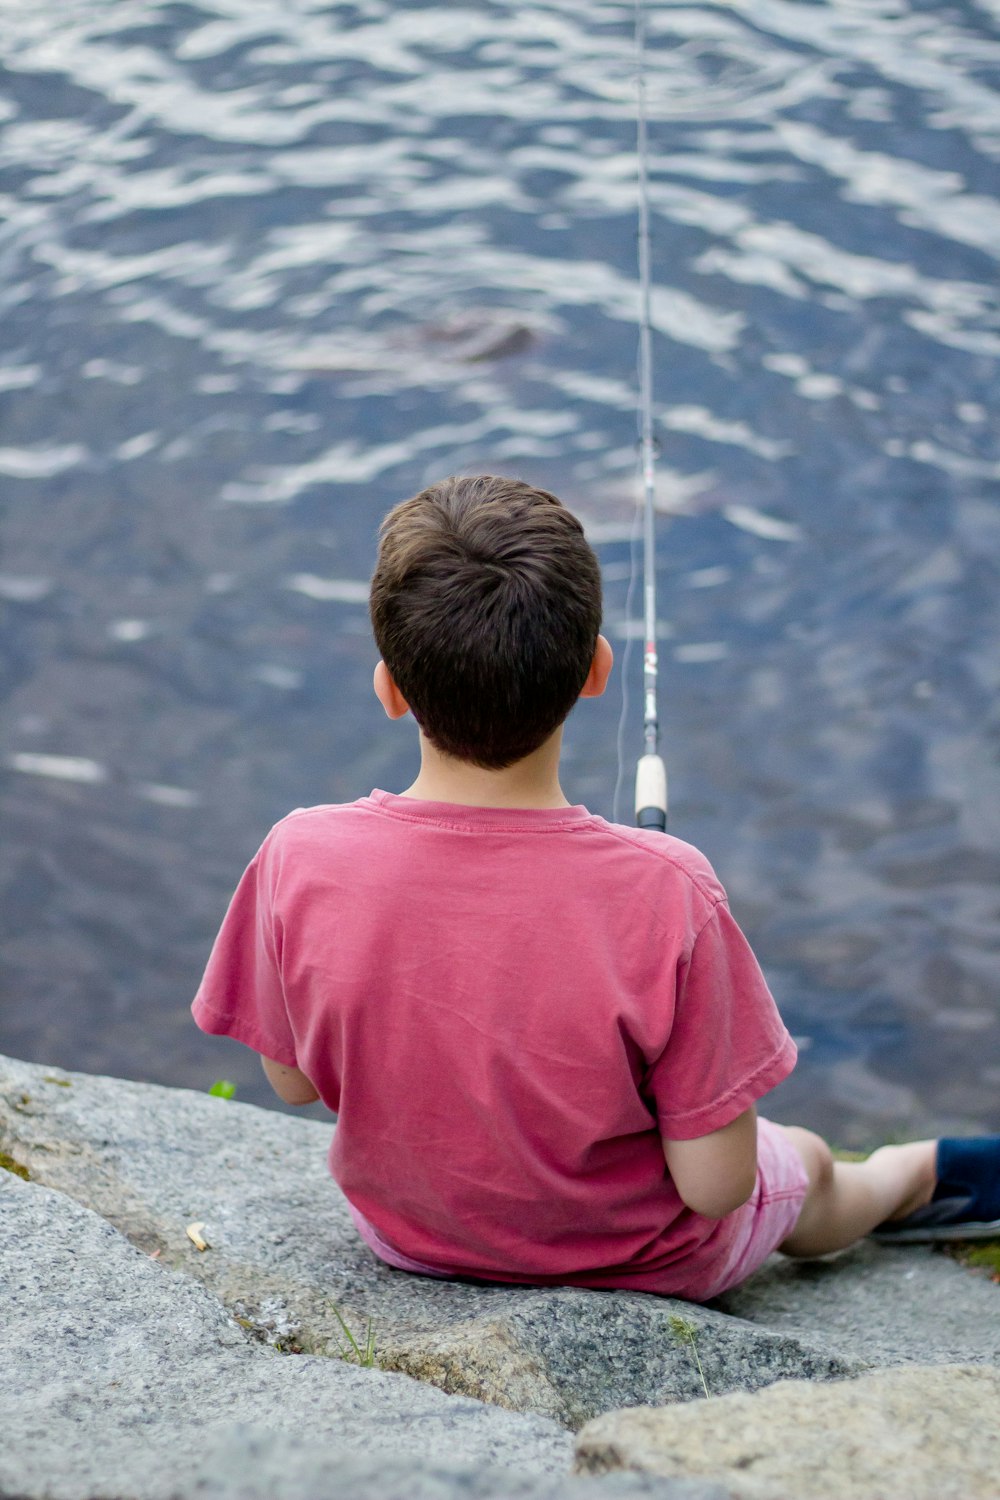 boy fishing on body of water